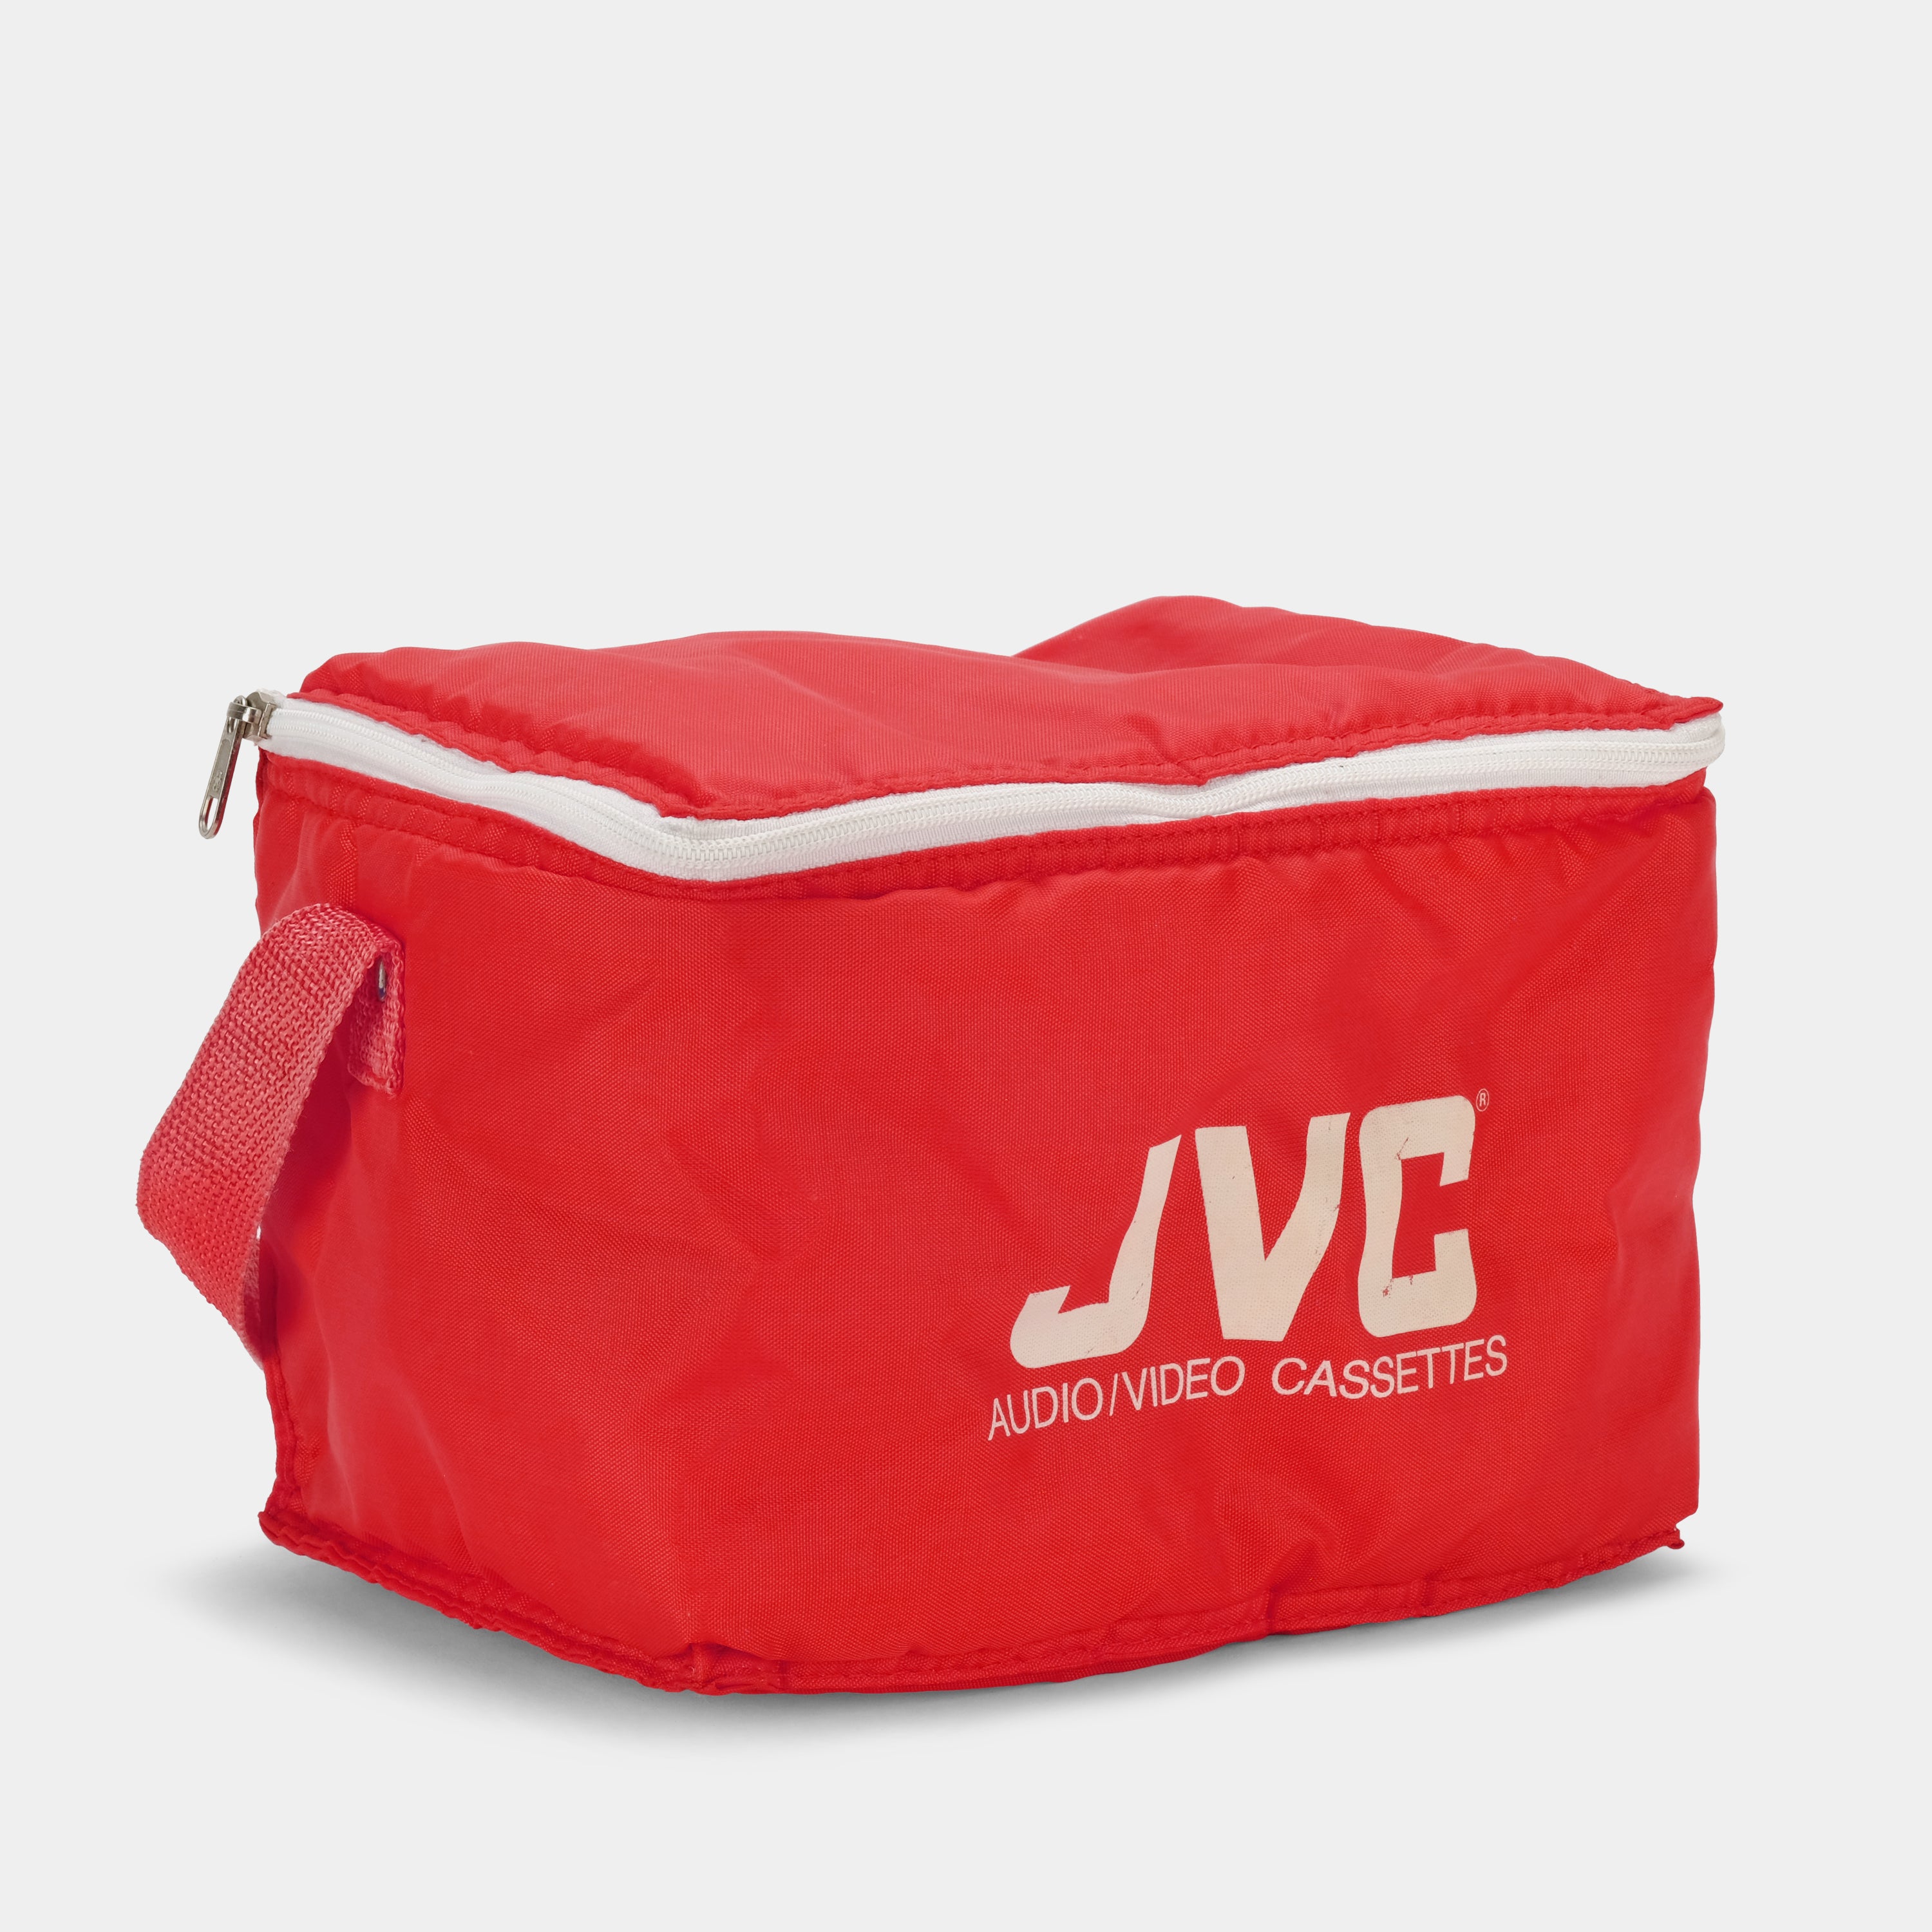 JVC Audio/Video Cassettes Red Nylon Bag